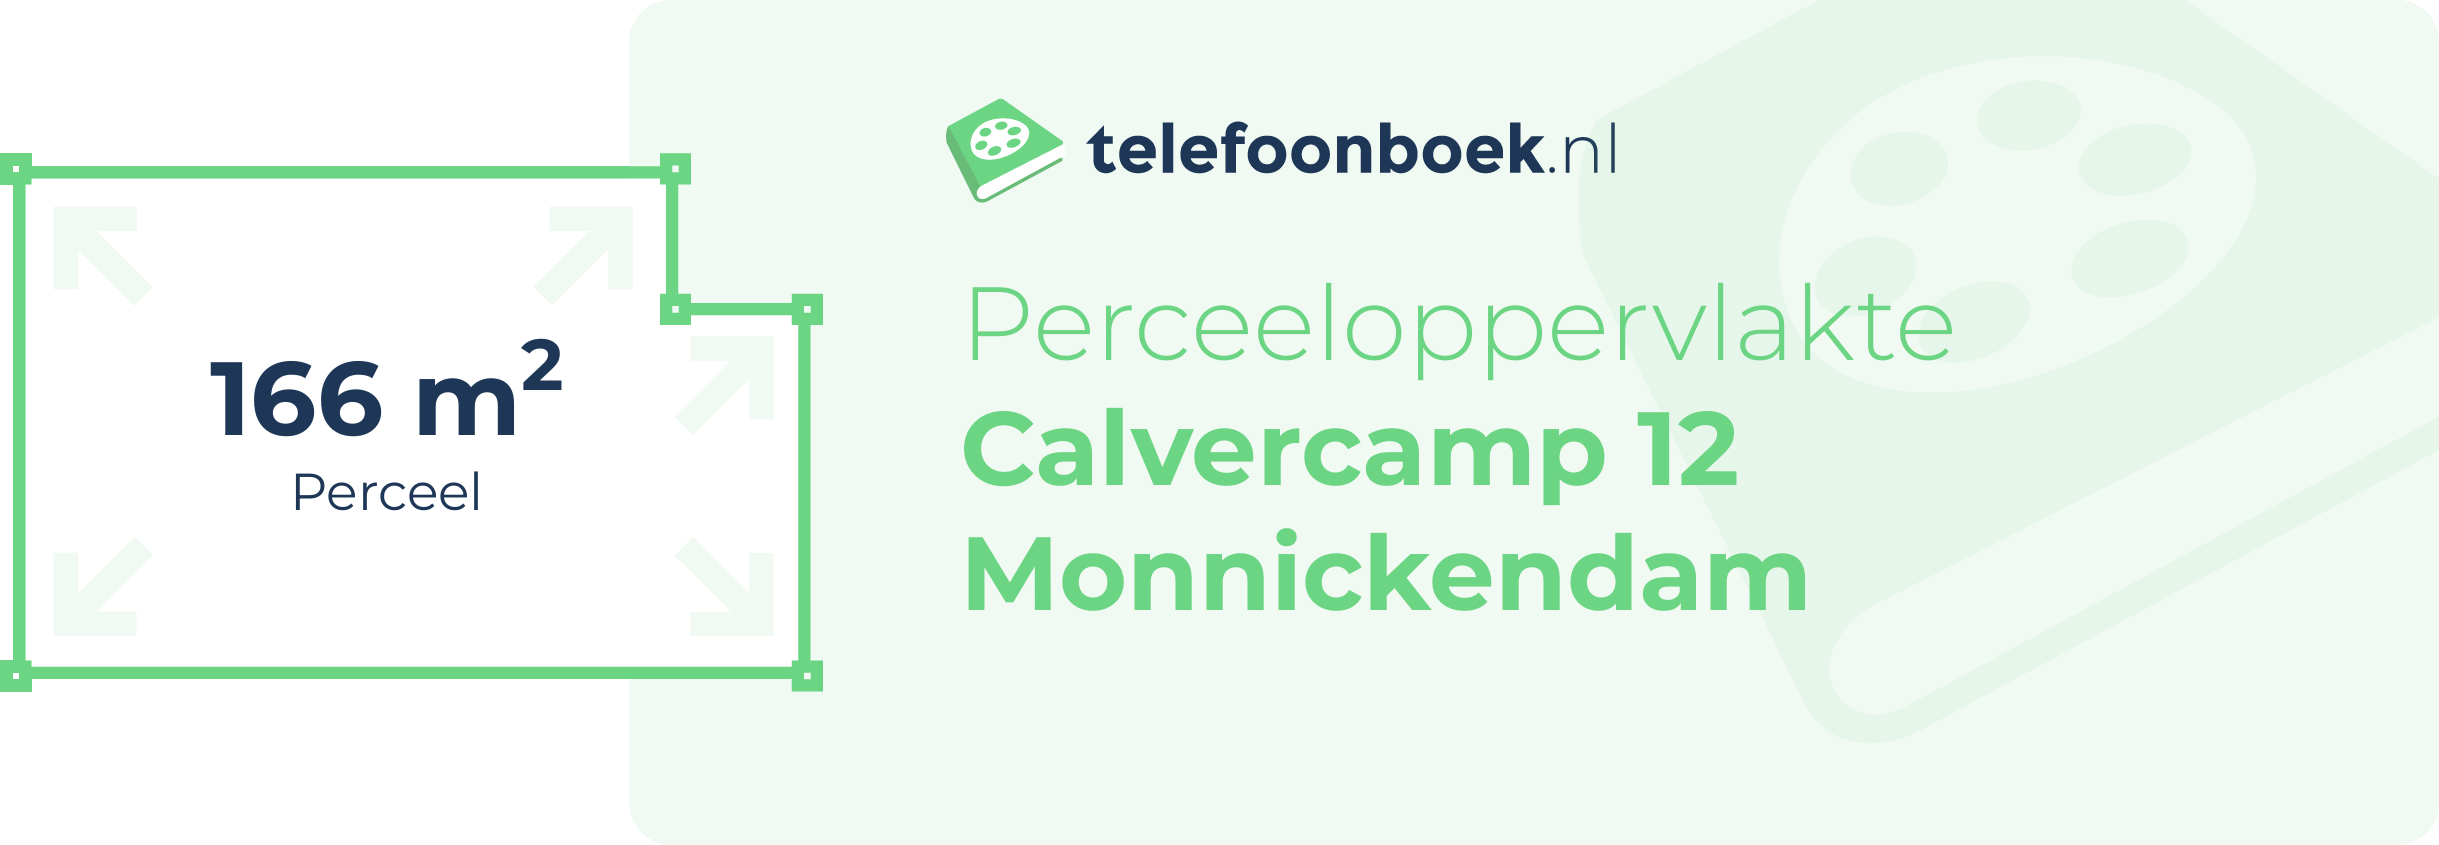 Perceeloppervlakte Calvercamp 12 Monnickendam